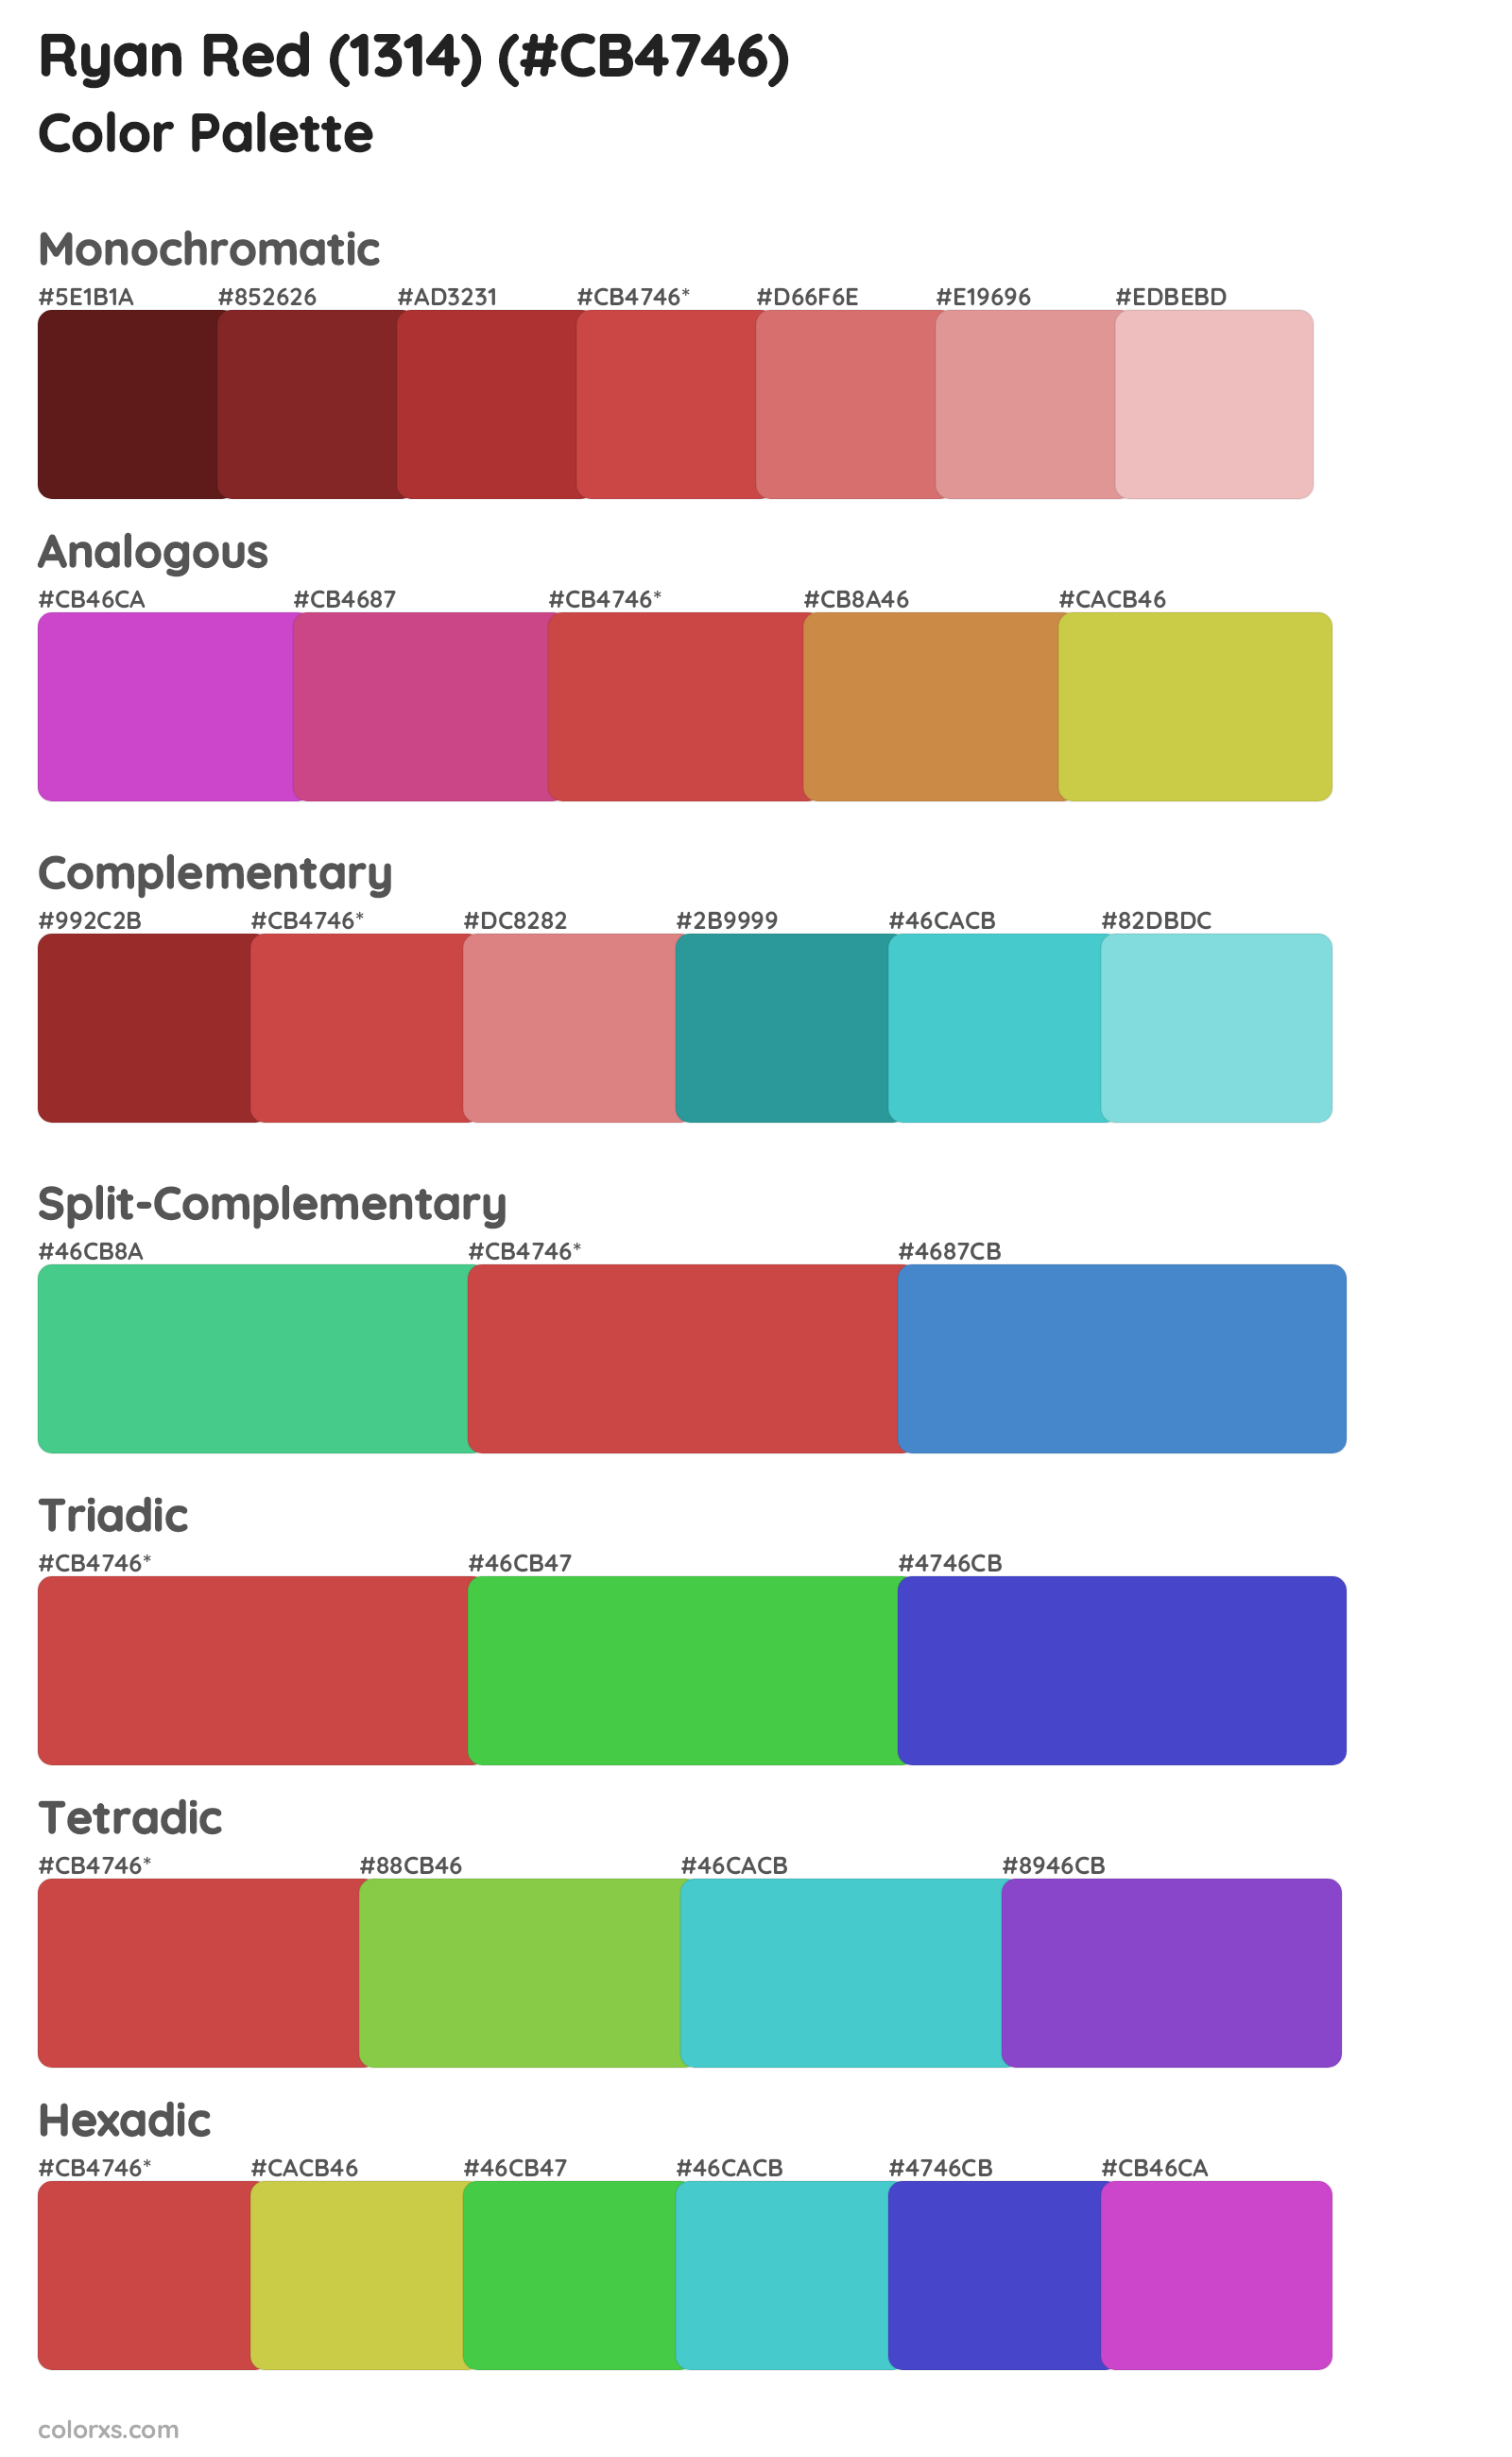 Ryan Red (1314) Color Scheme Palettes